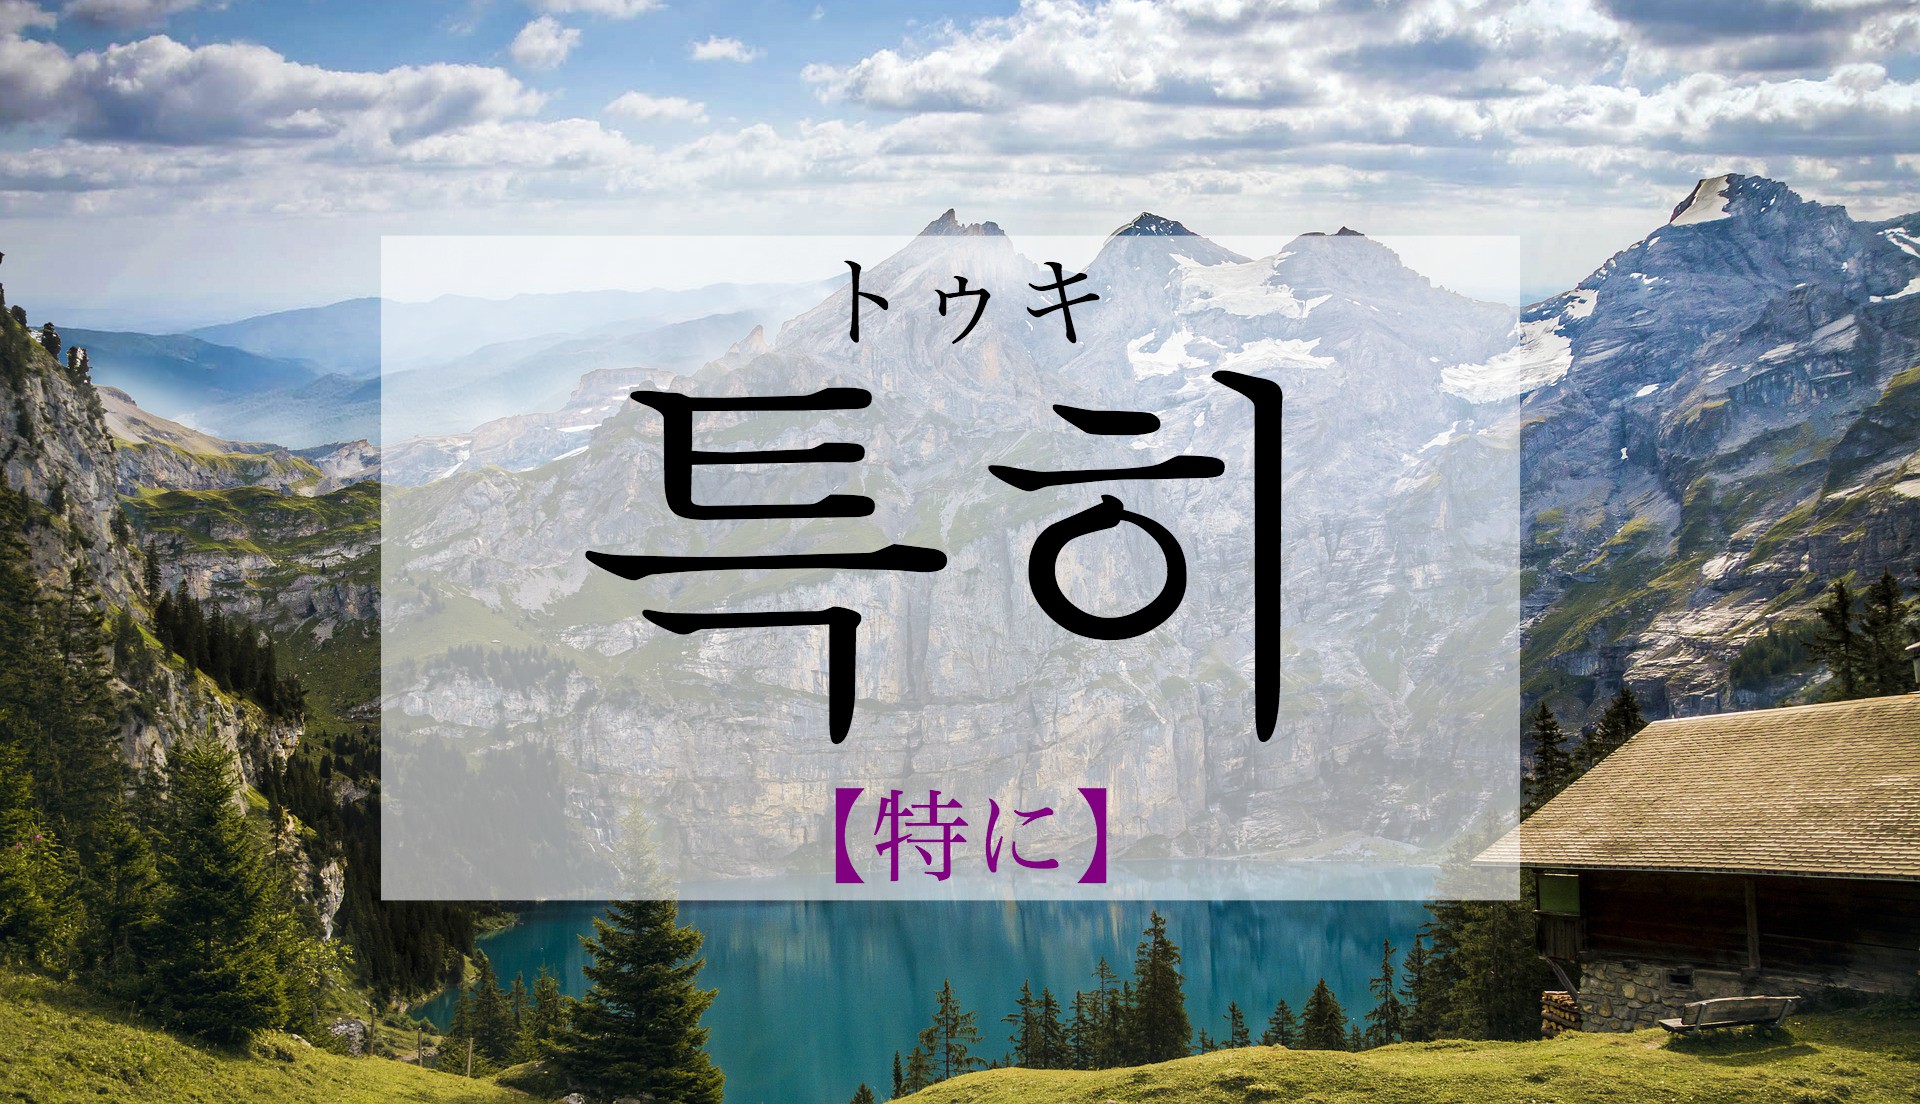 koreanword-especially